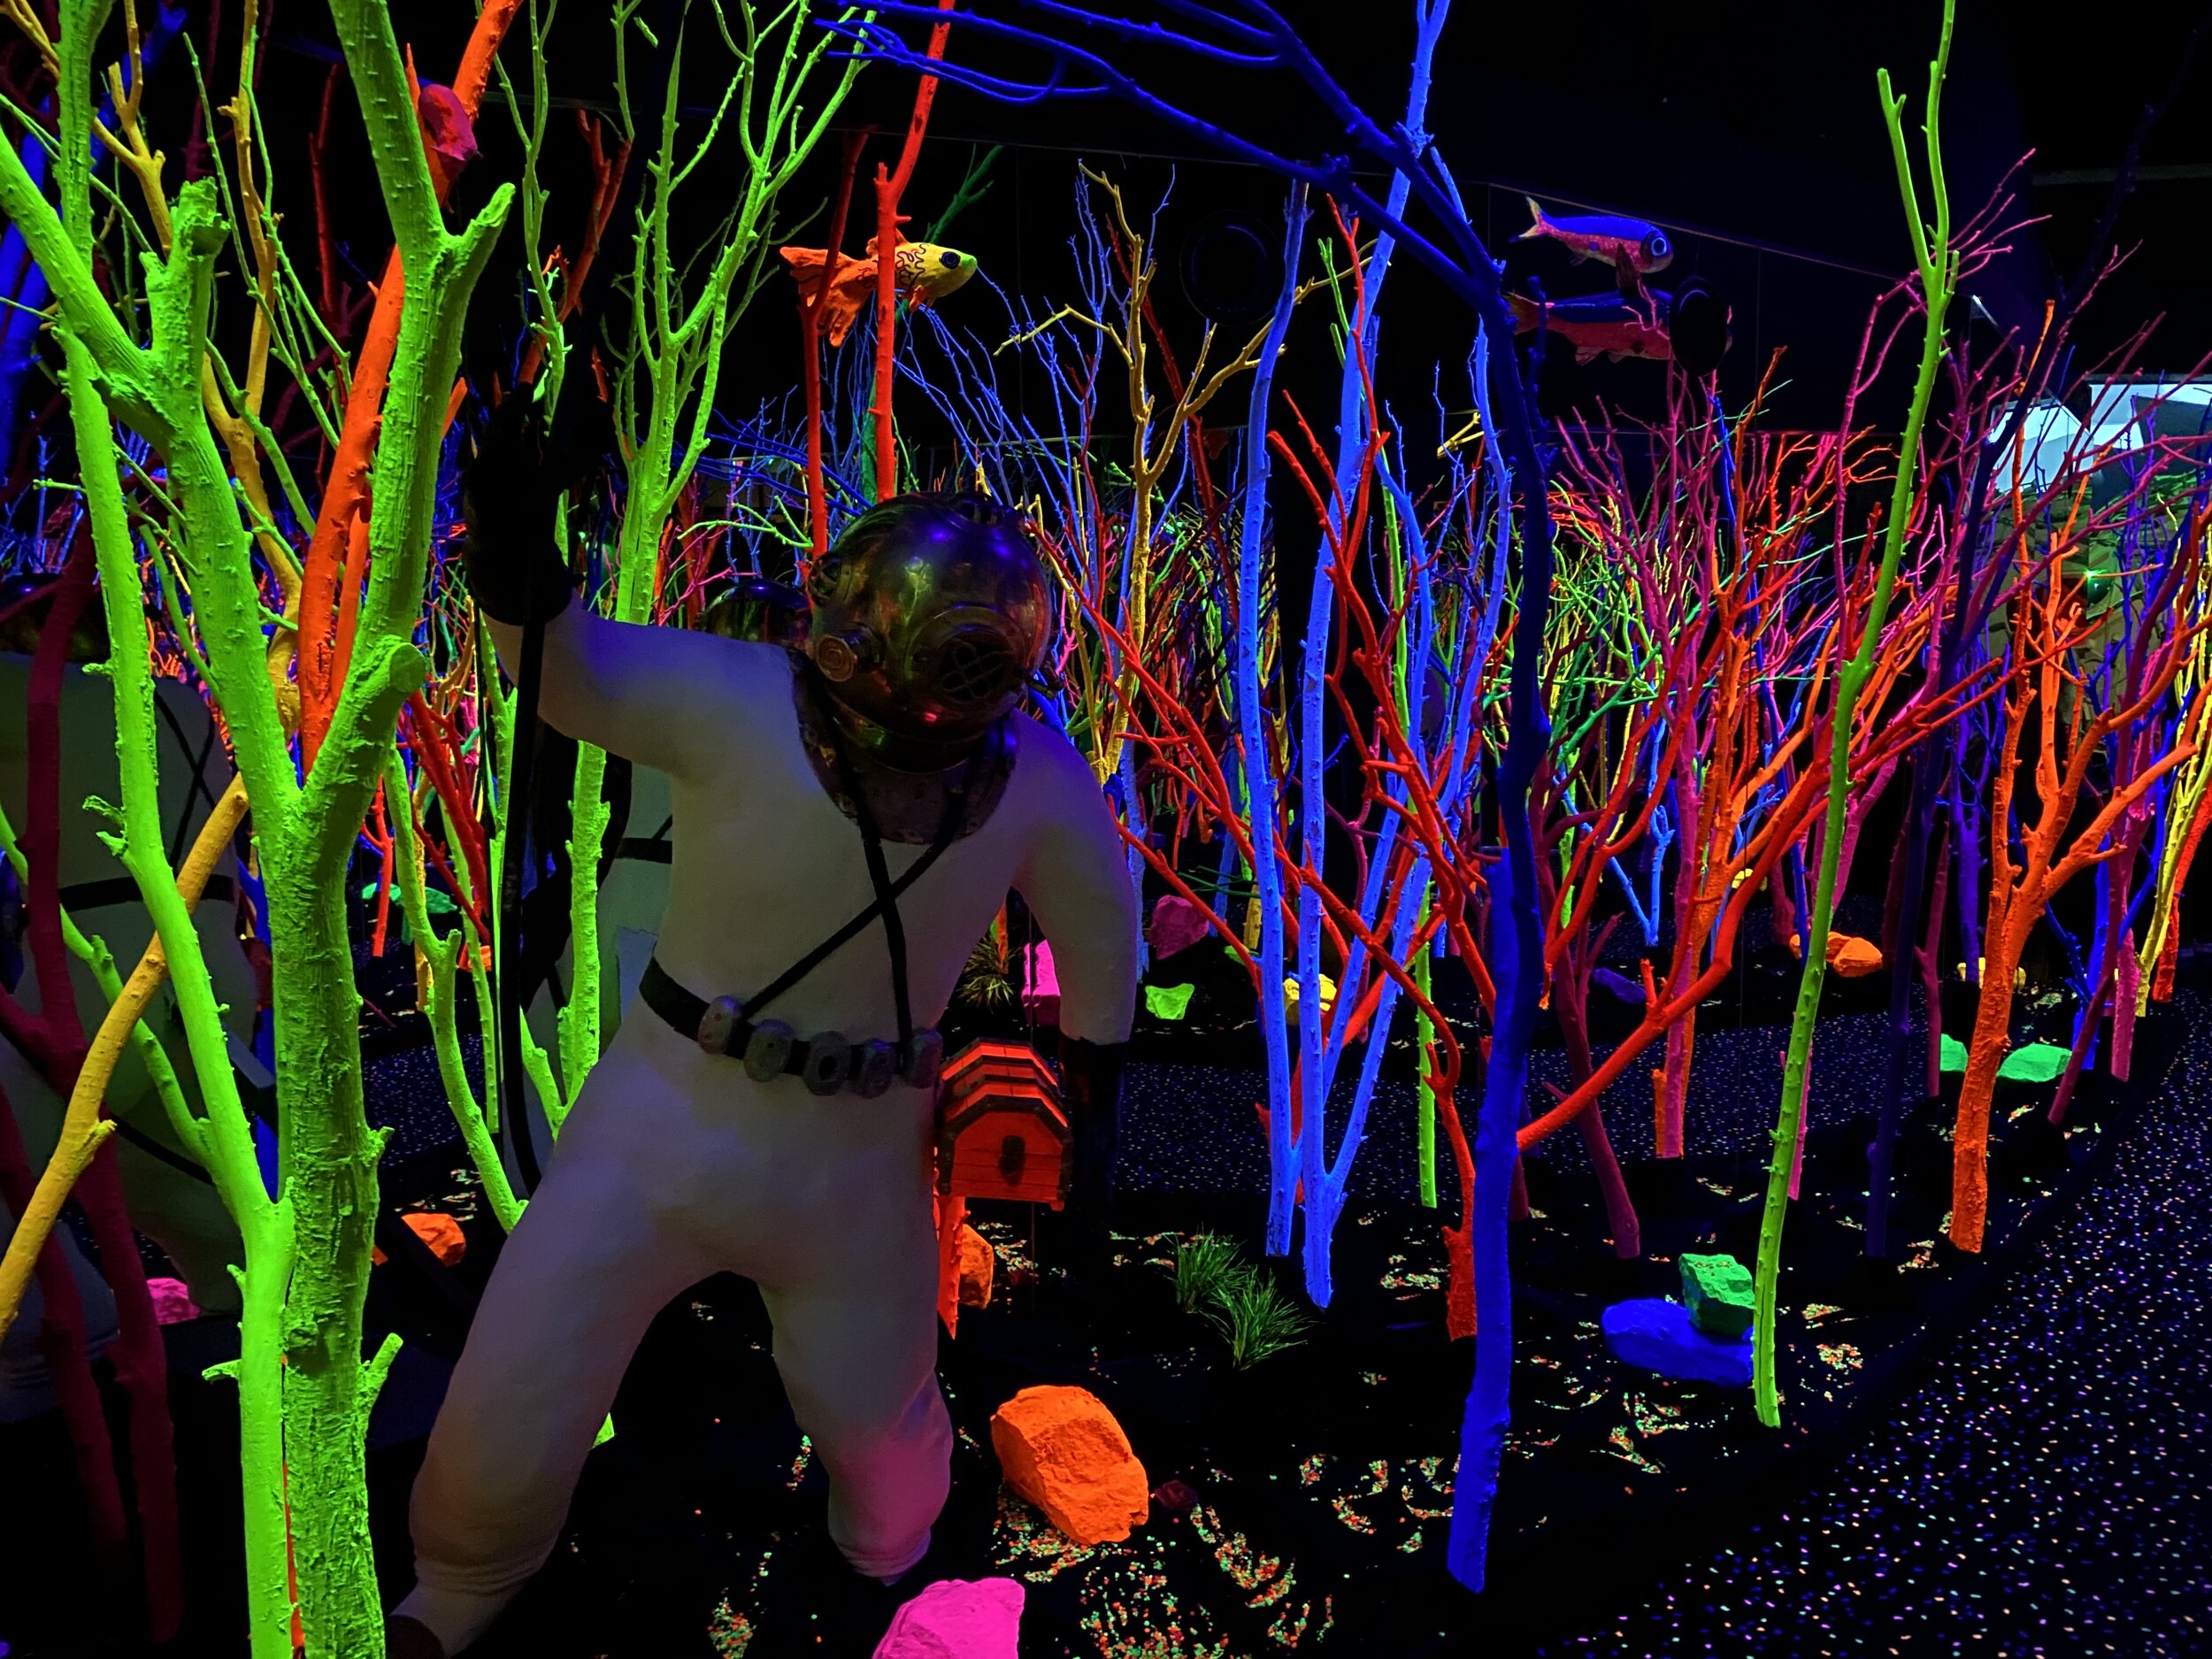 Neon art exhibit with multicolored fluorescent trees